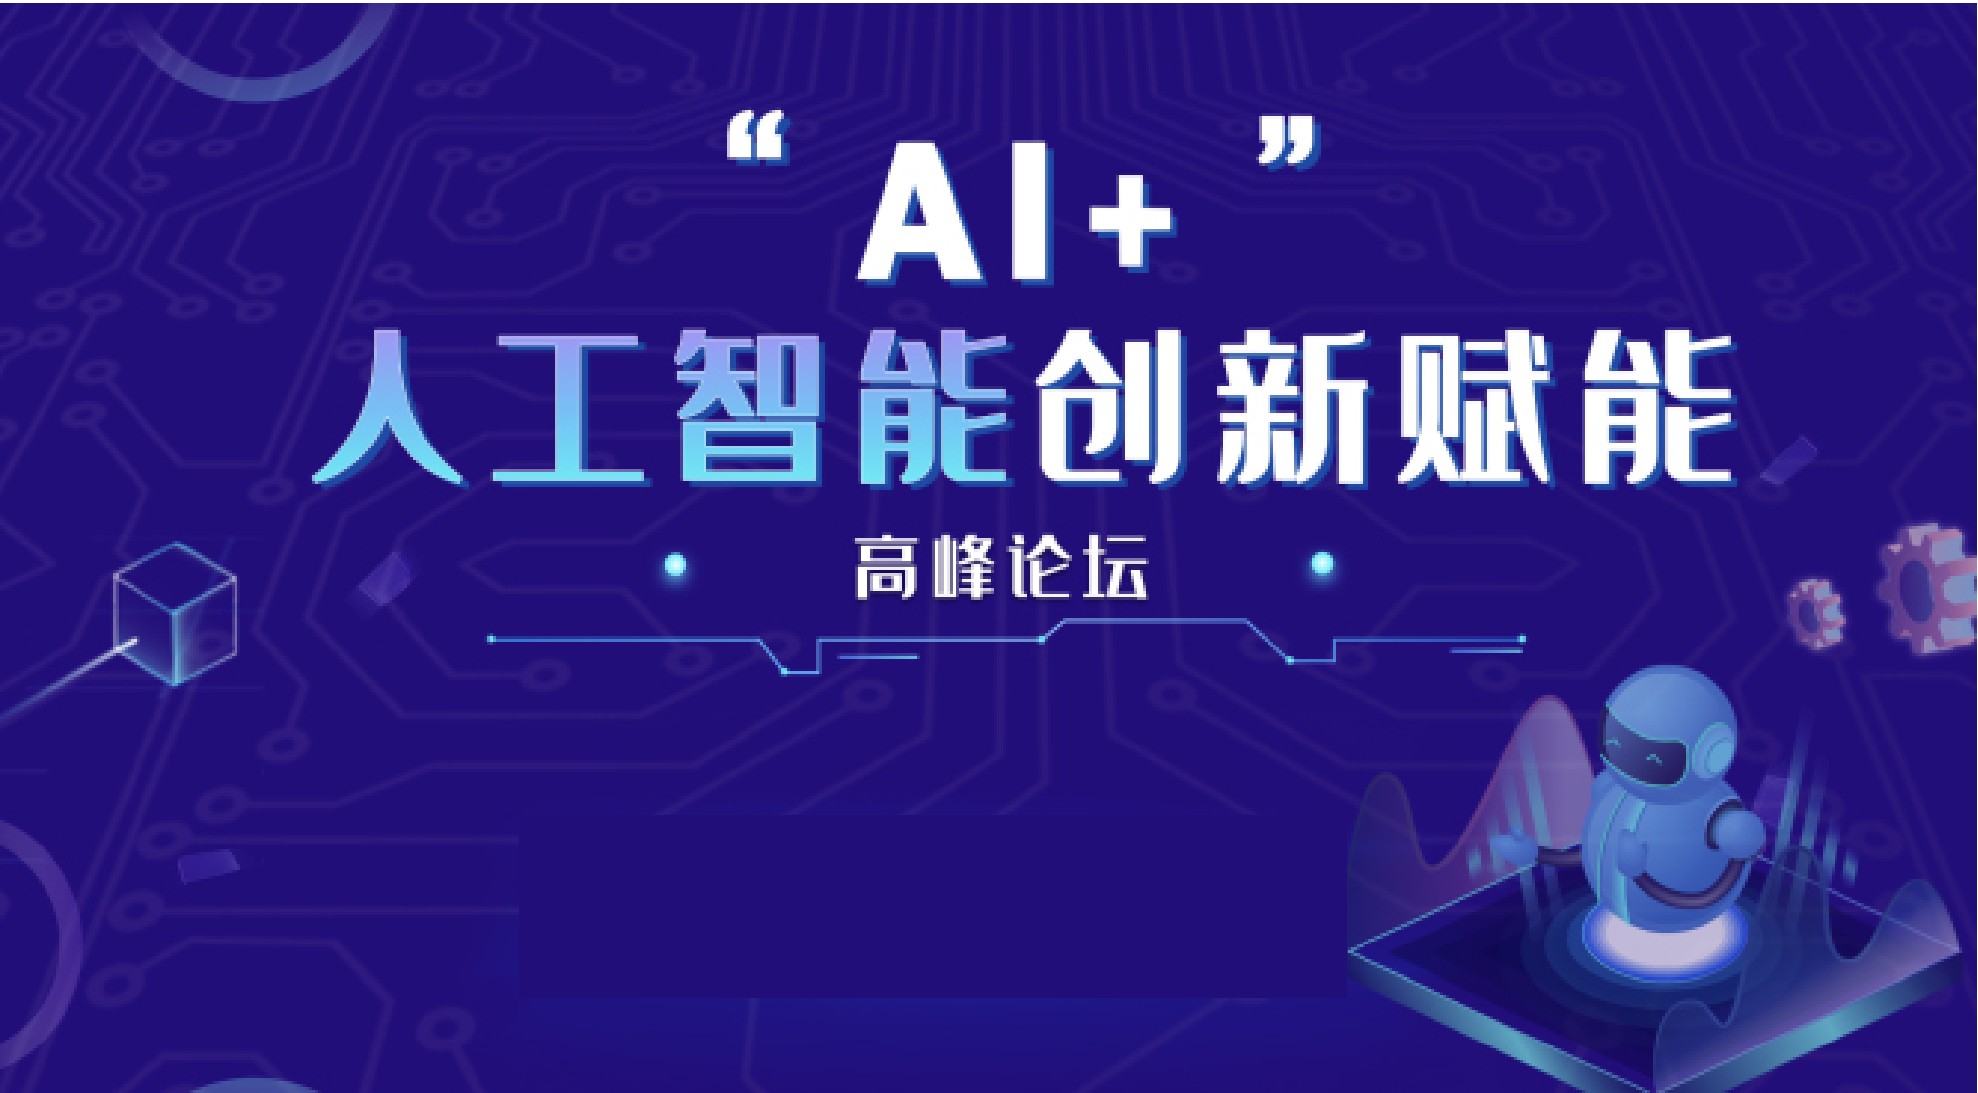 AIoT 2022深圳“AI+”人工智能创新赋能高峰论坛